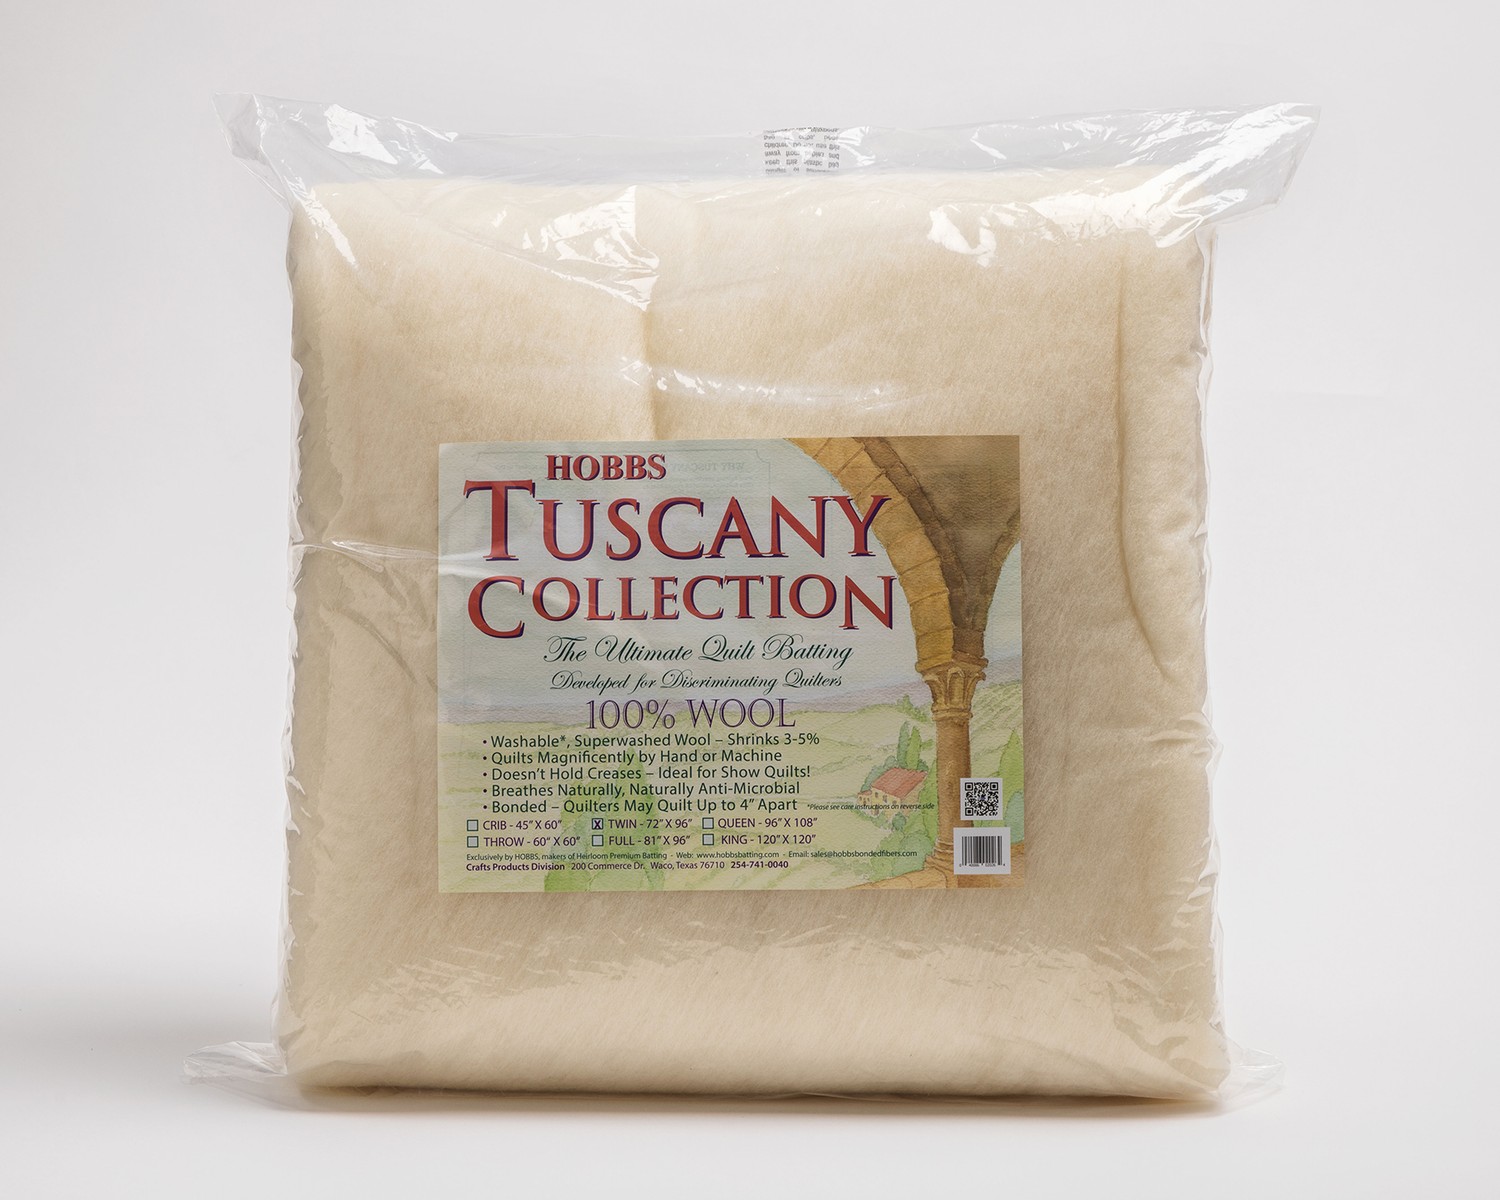 Hobbs Tuscany Supreme 100% Natural Cotton Batting - King Size 120 x 120